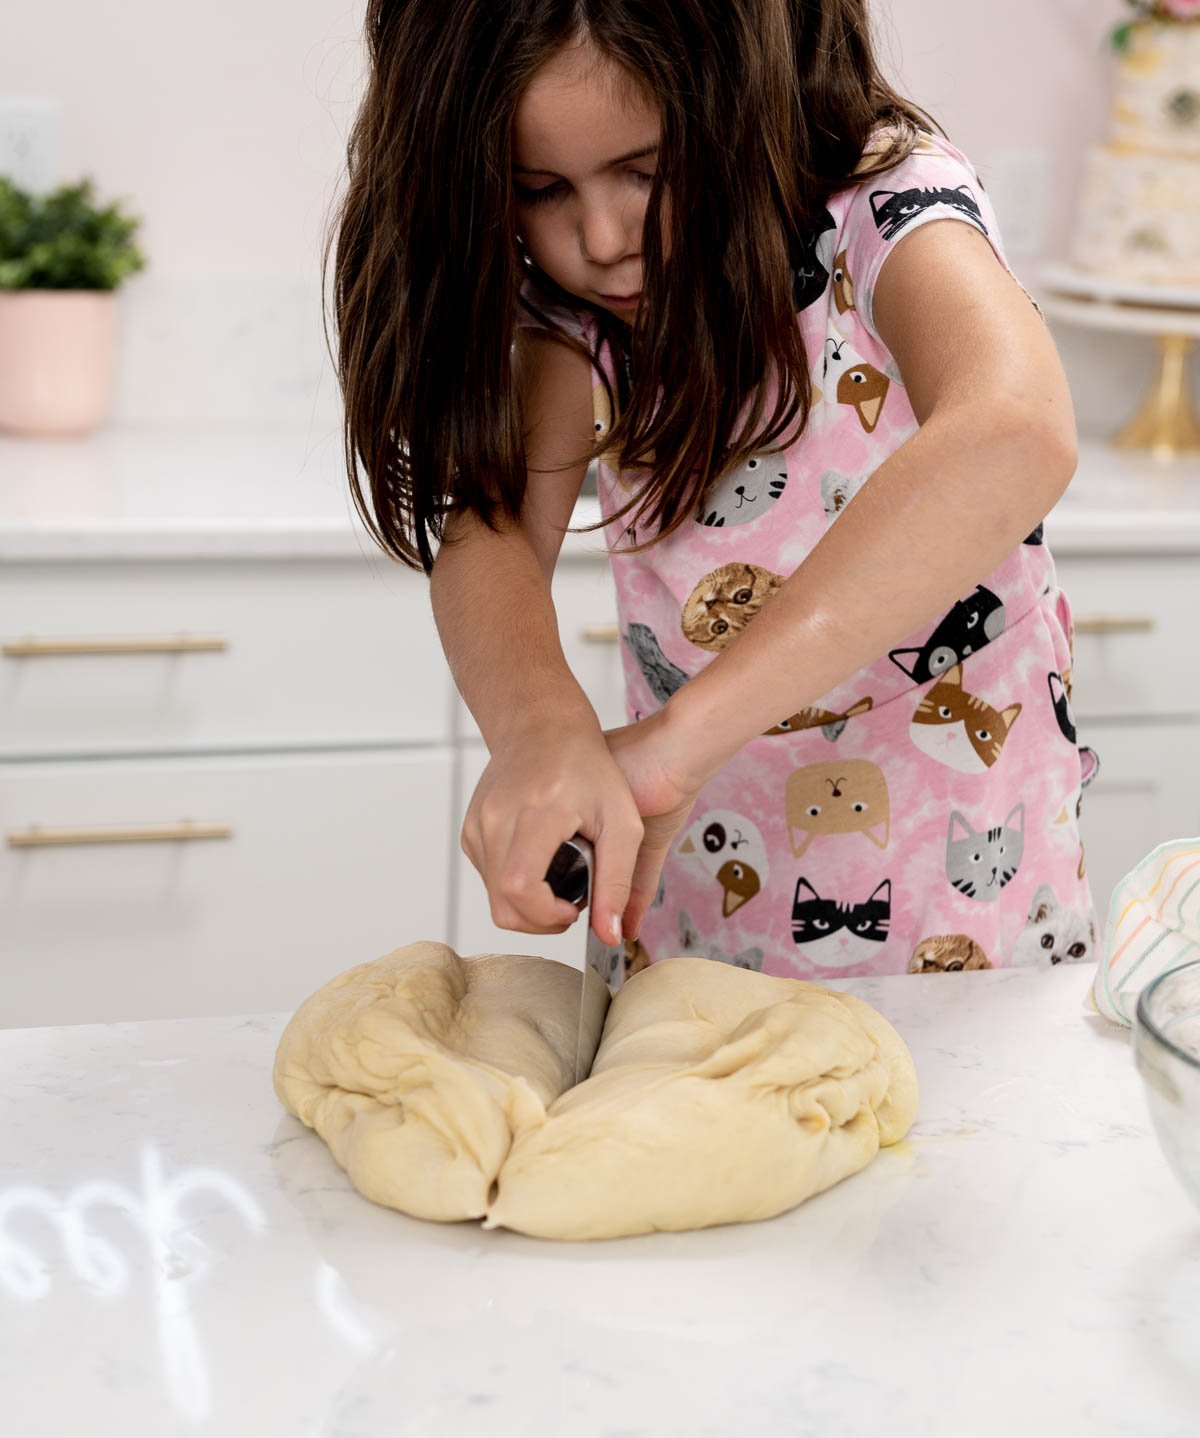 dividing bread dough into two